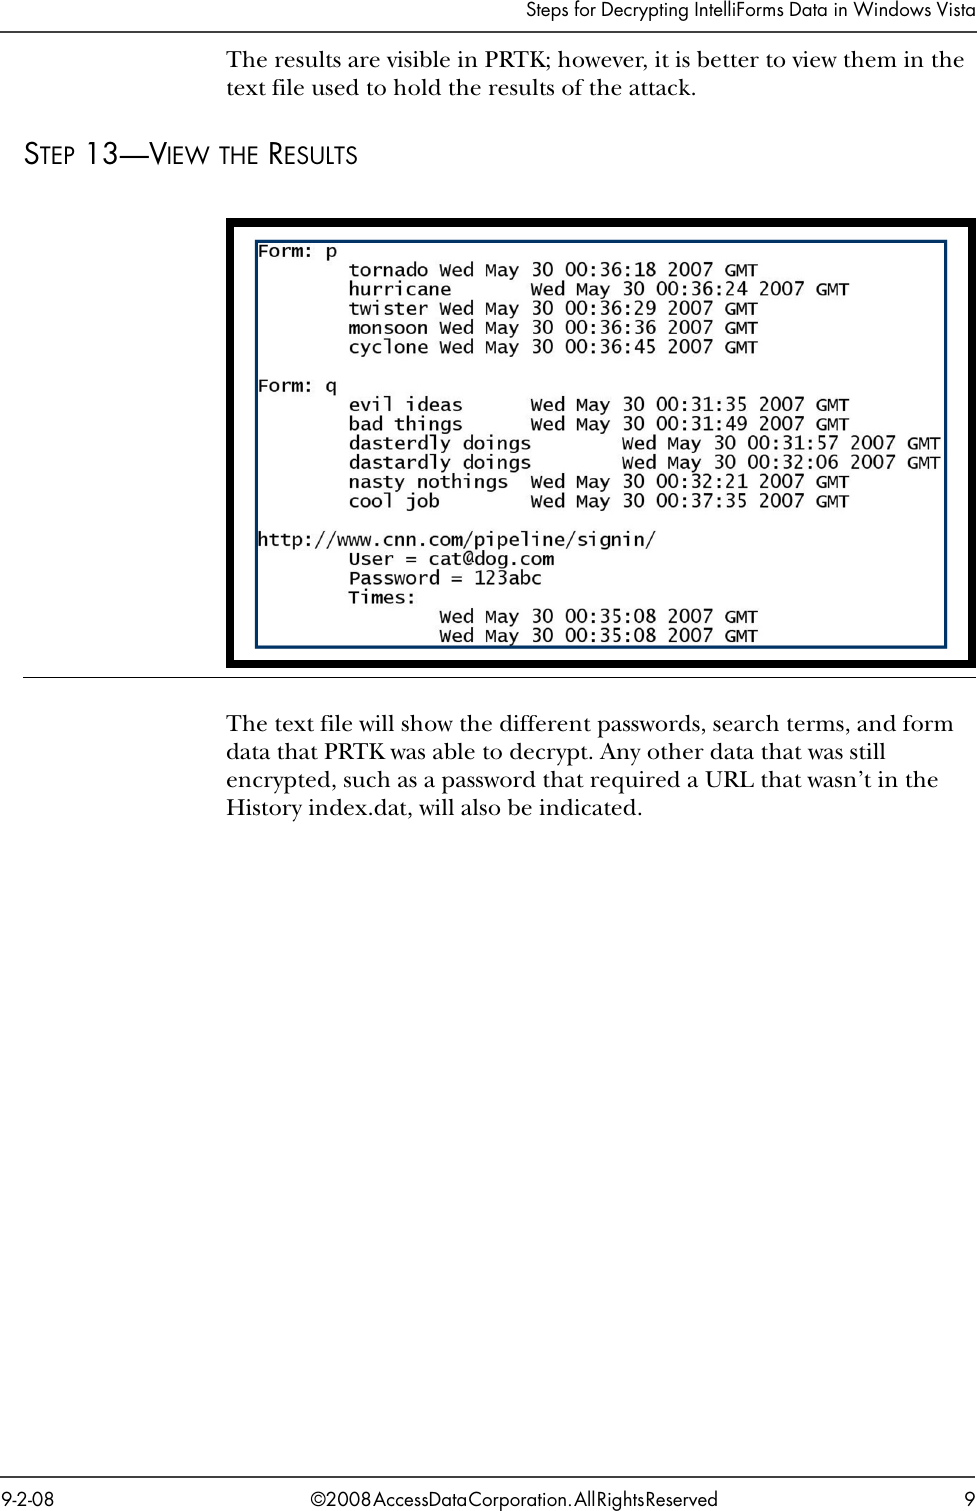 Page 9 of 9 - Decrypting Intelliforms  9-8-08